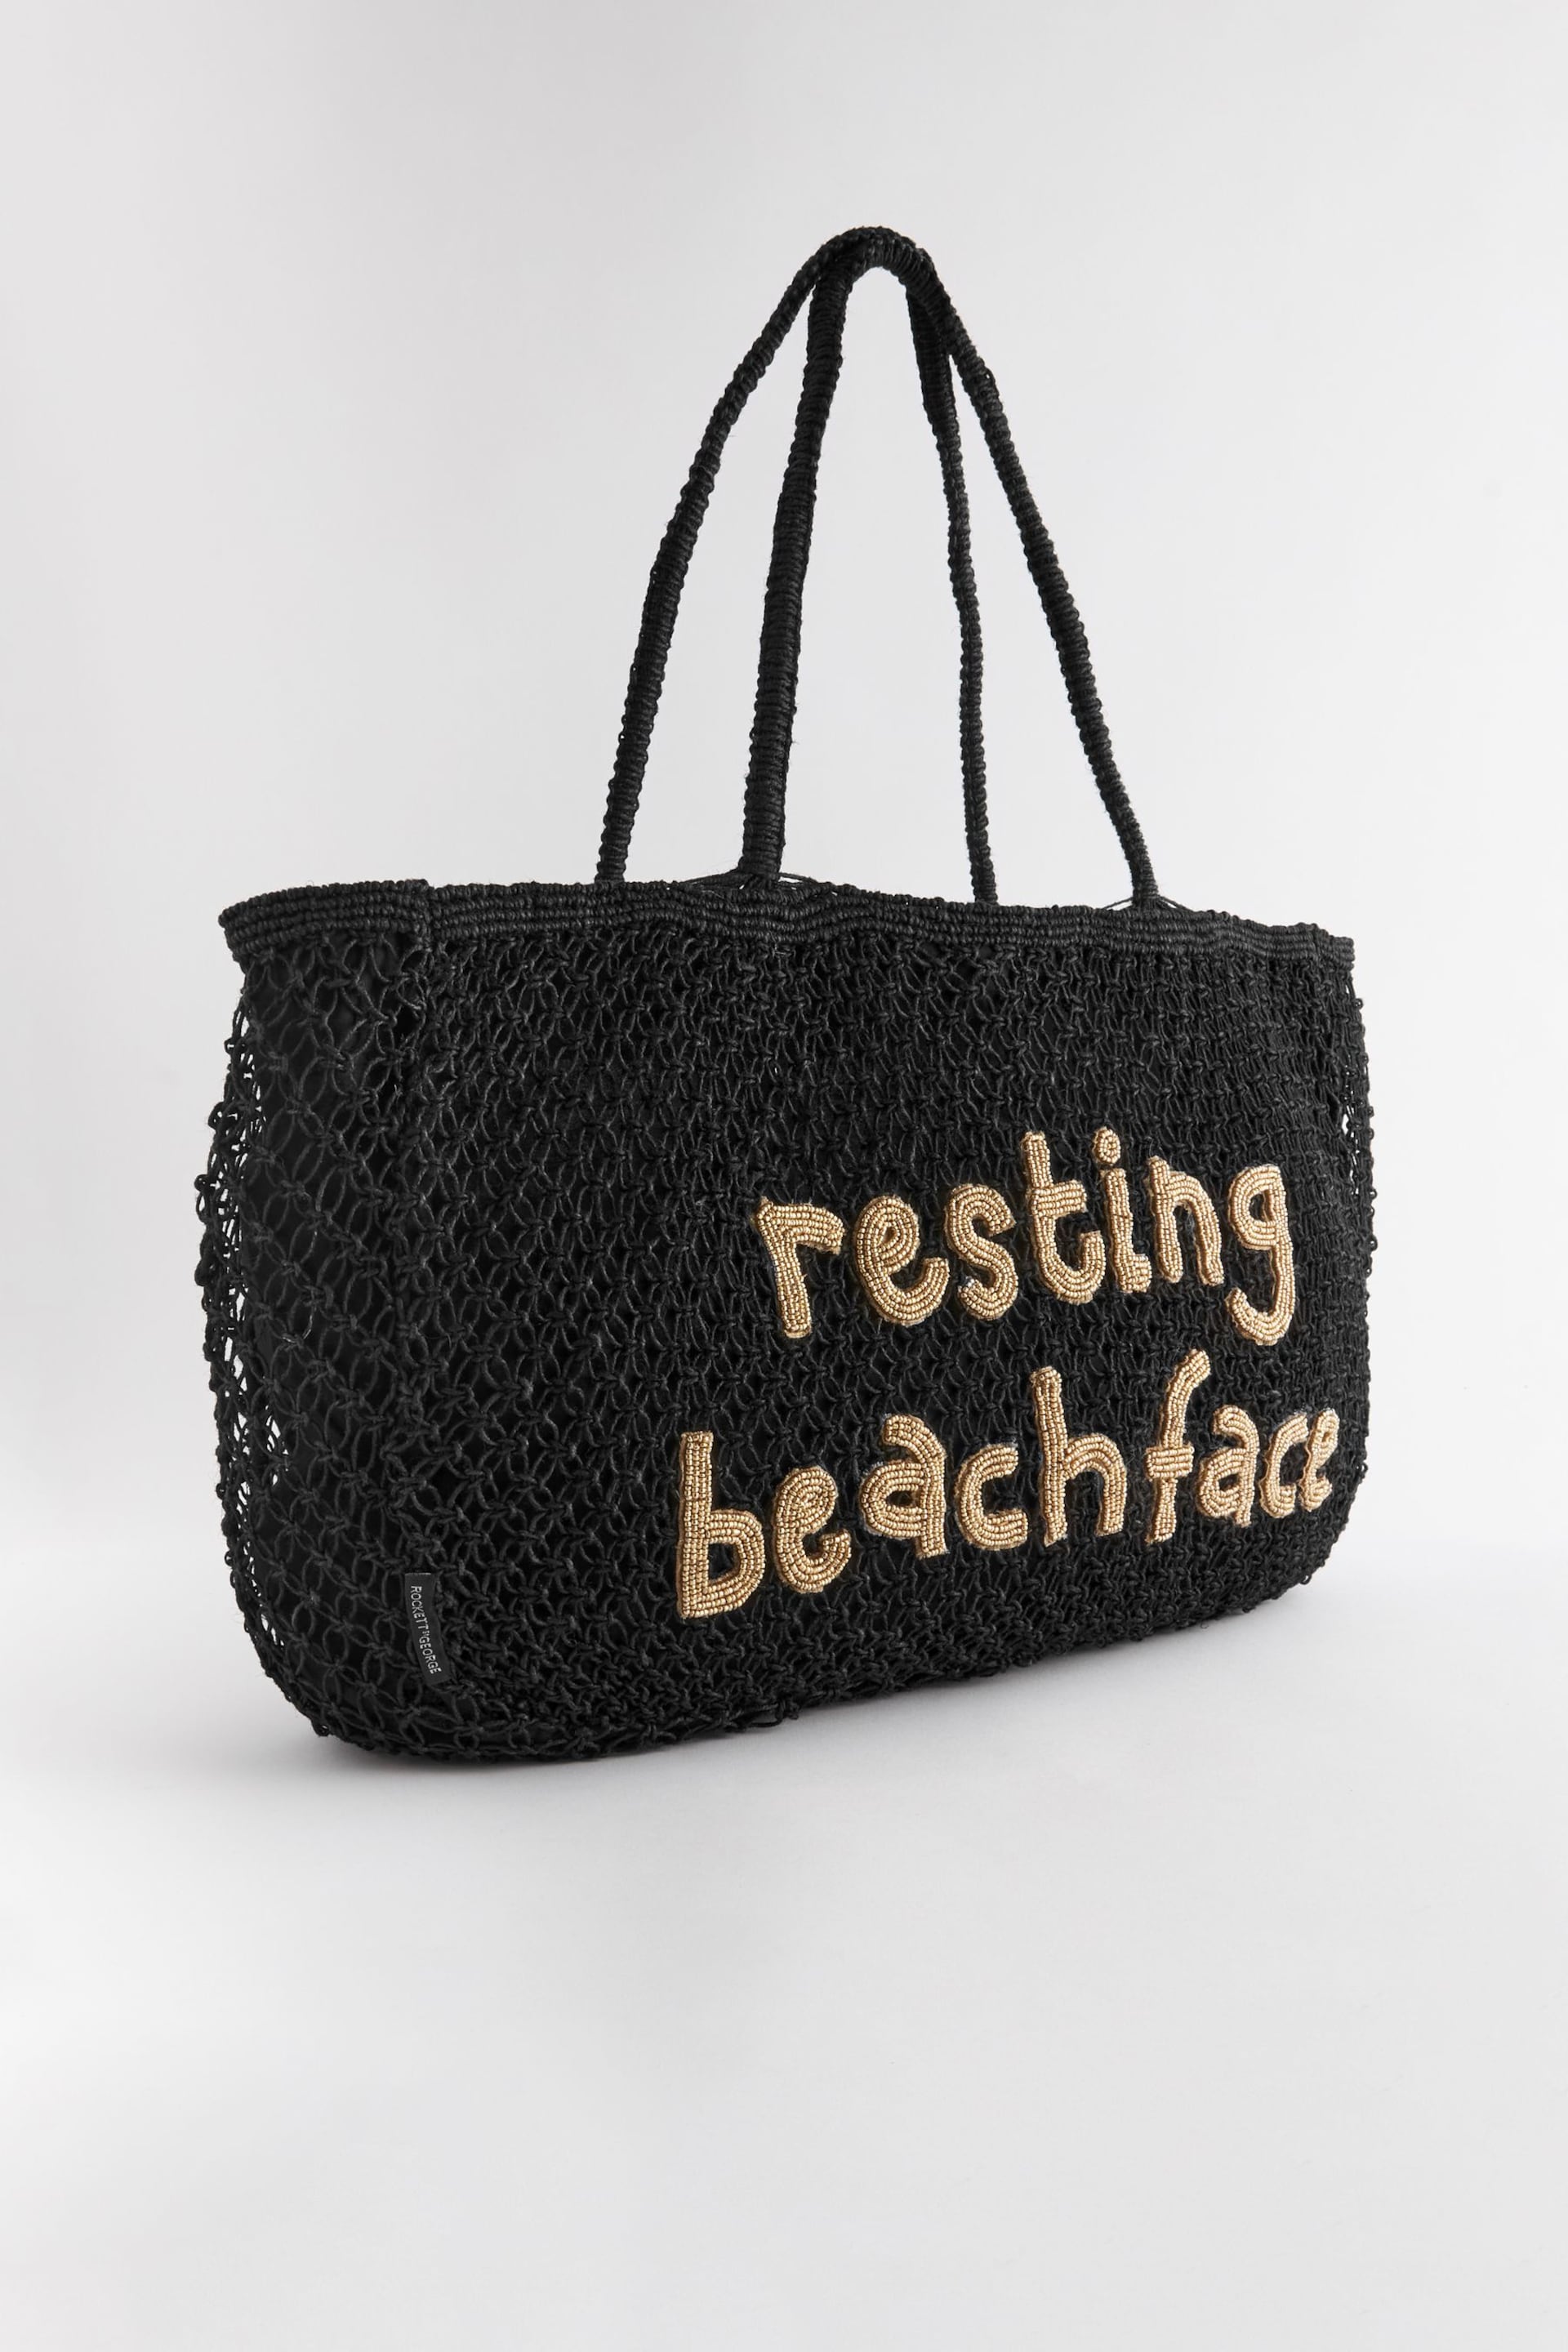 Rockett St George Black Straw Slogan Beach Bag - Image 6 of 10